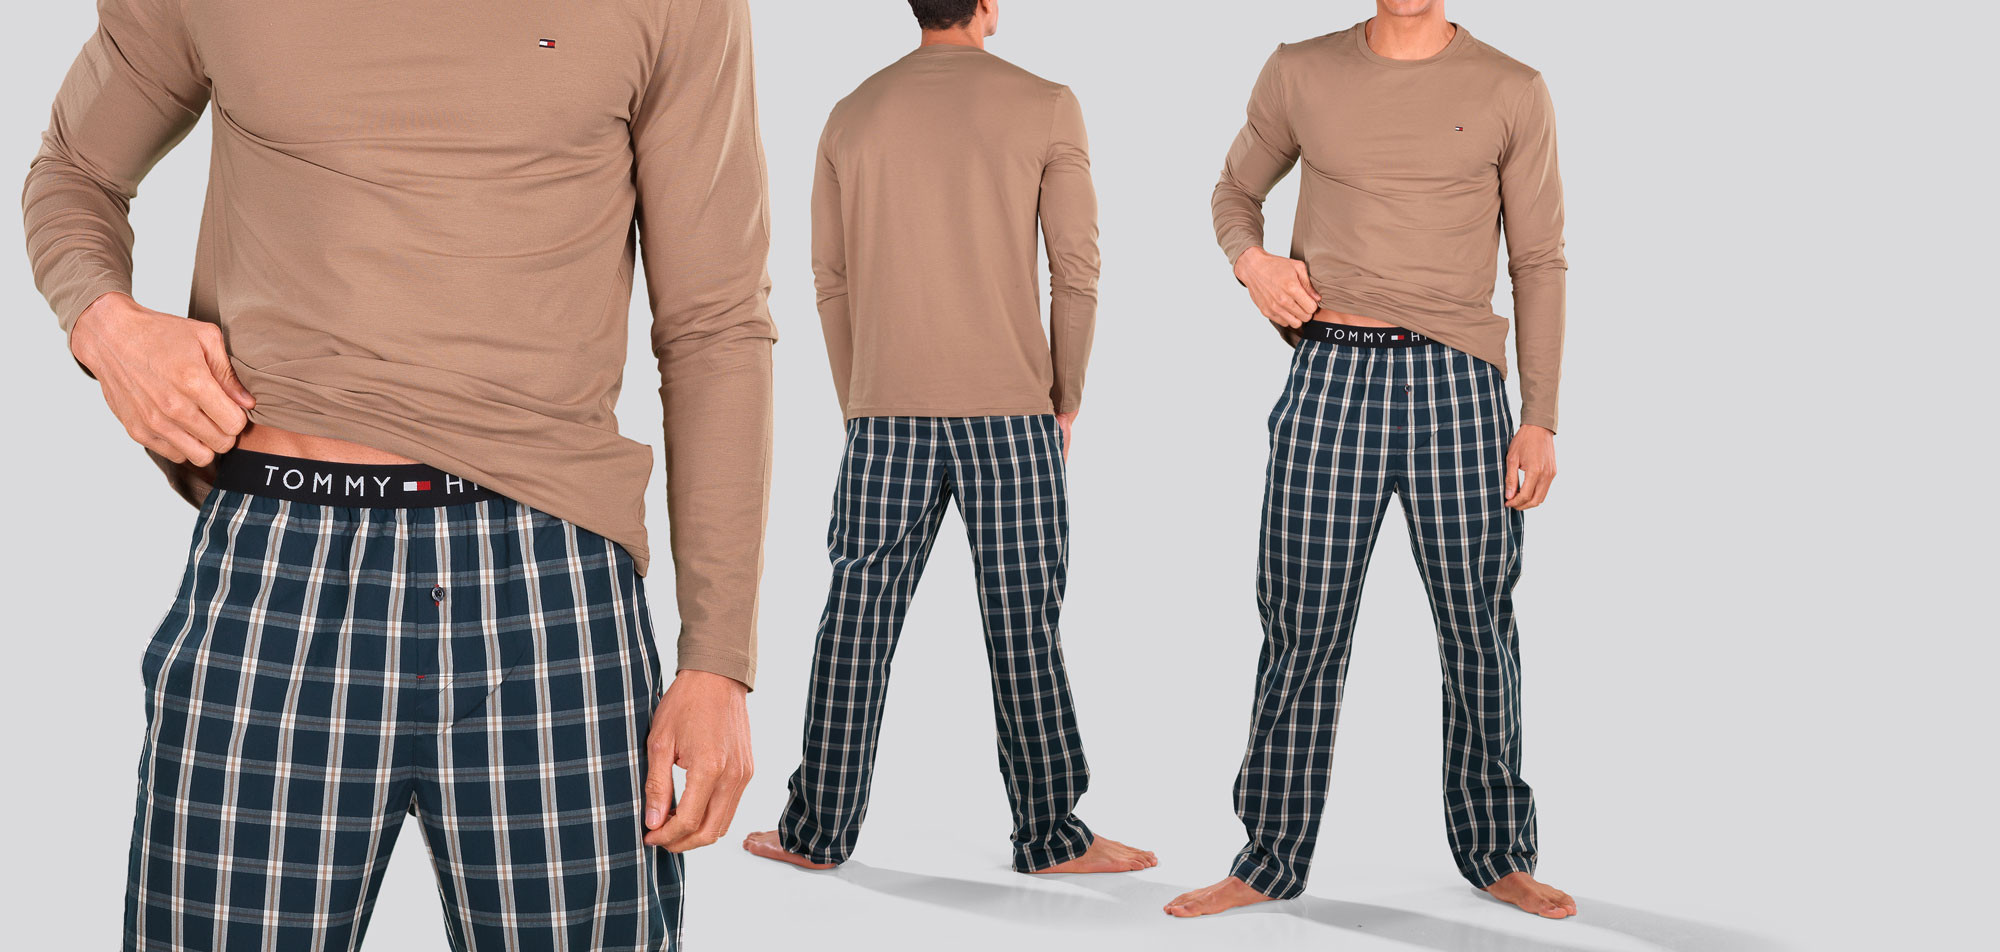 Tommy Hilfiger Pyjama Set 960 Woven Set, color Nee